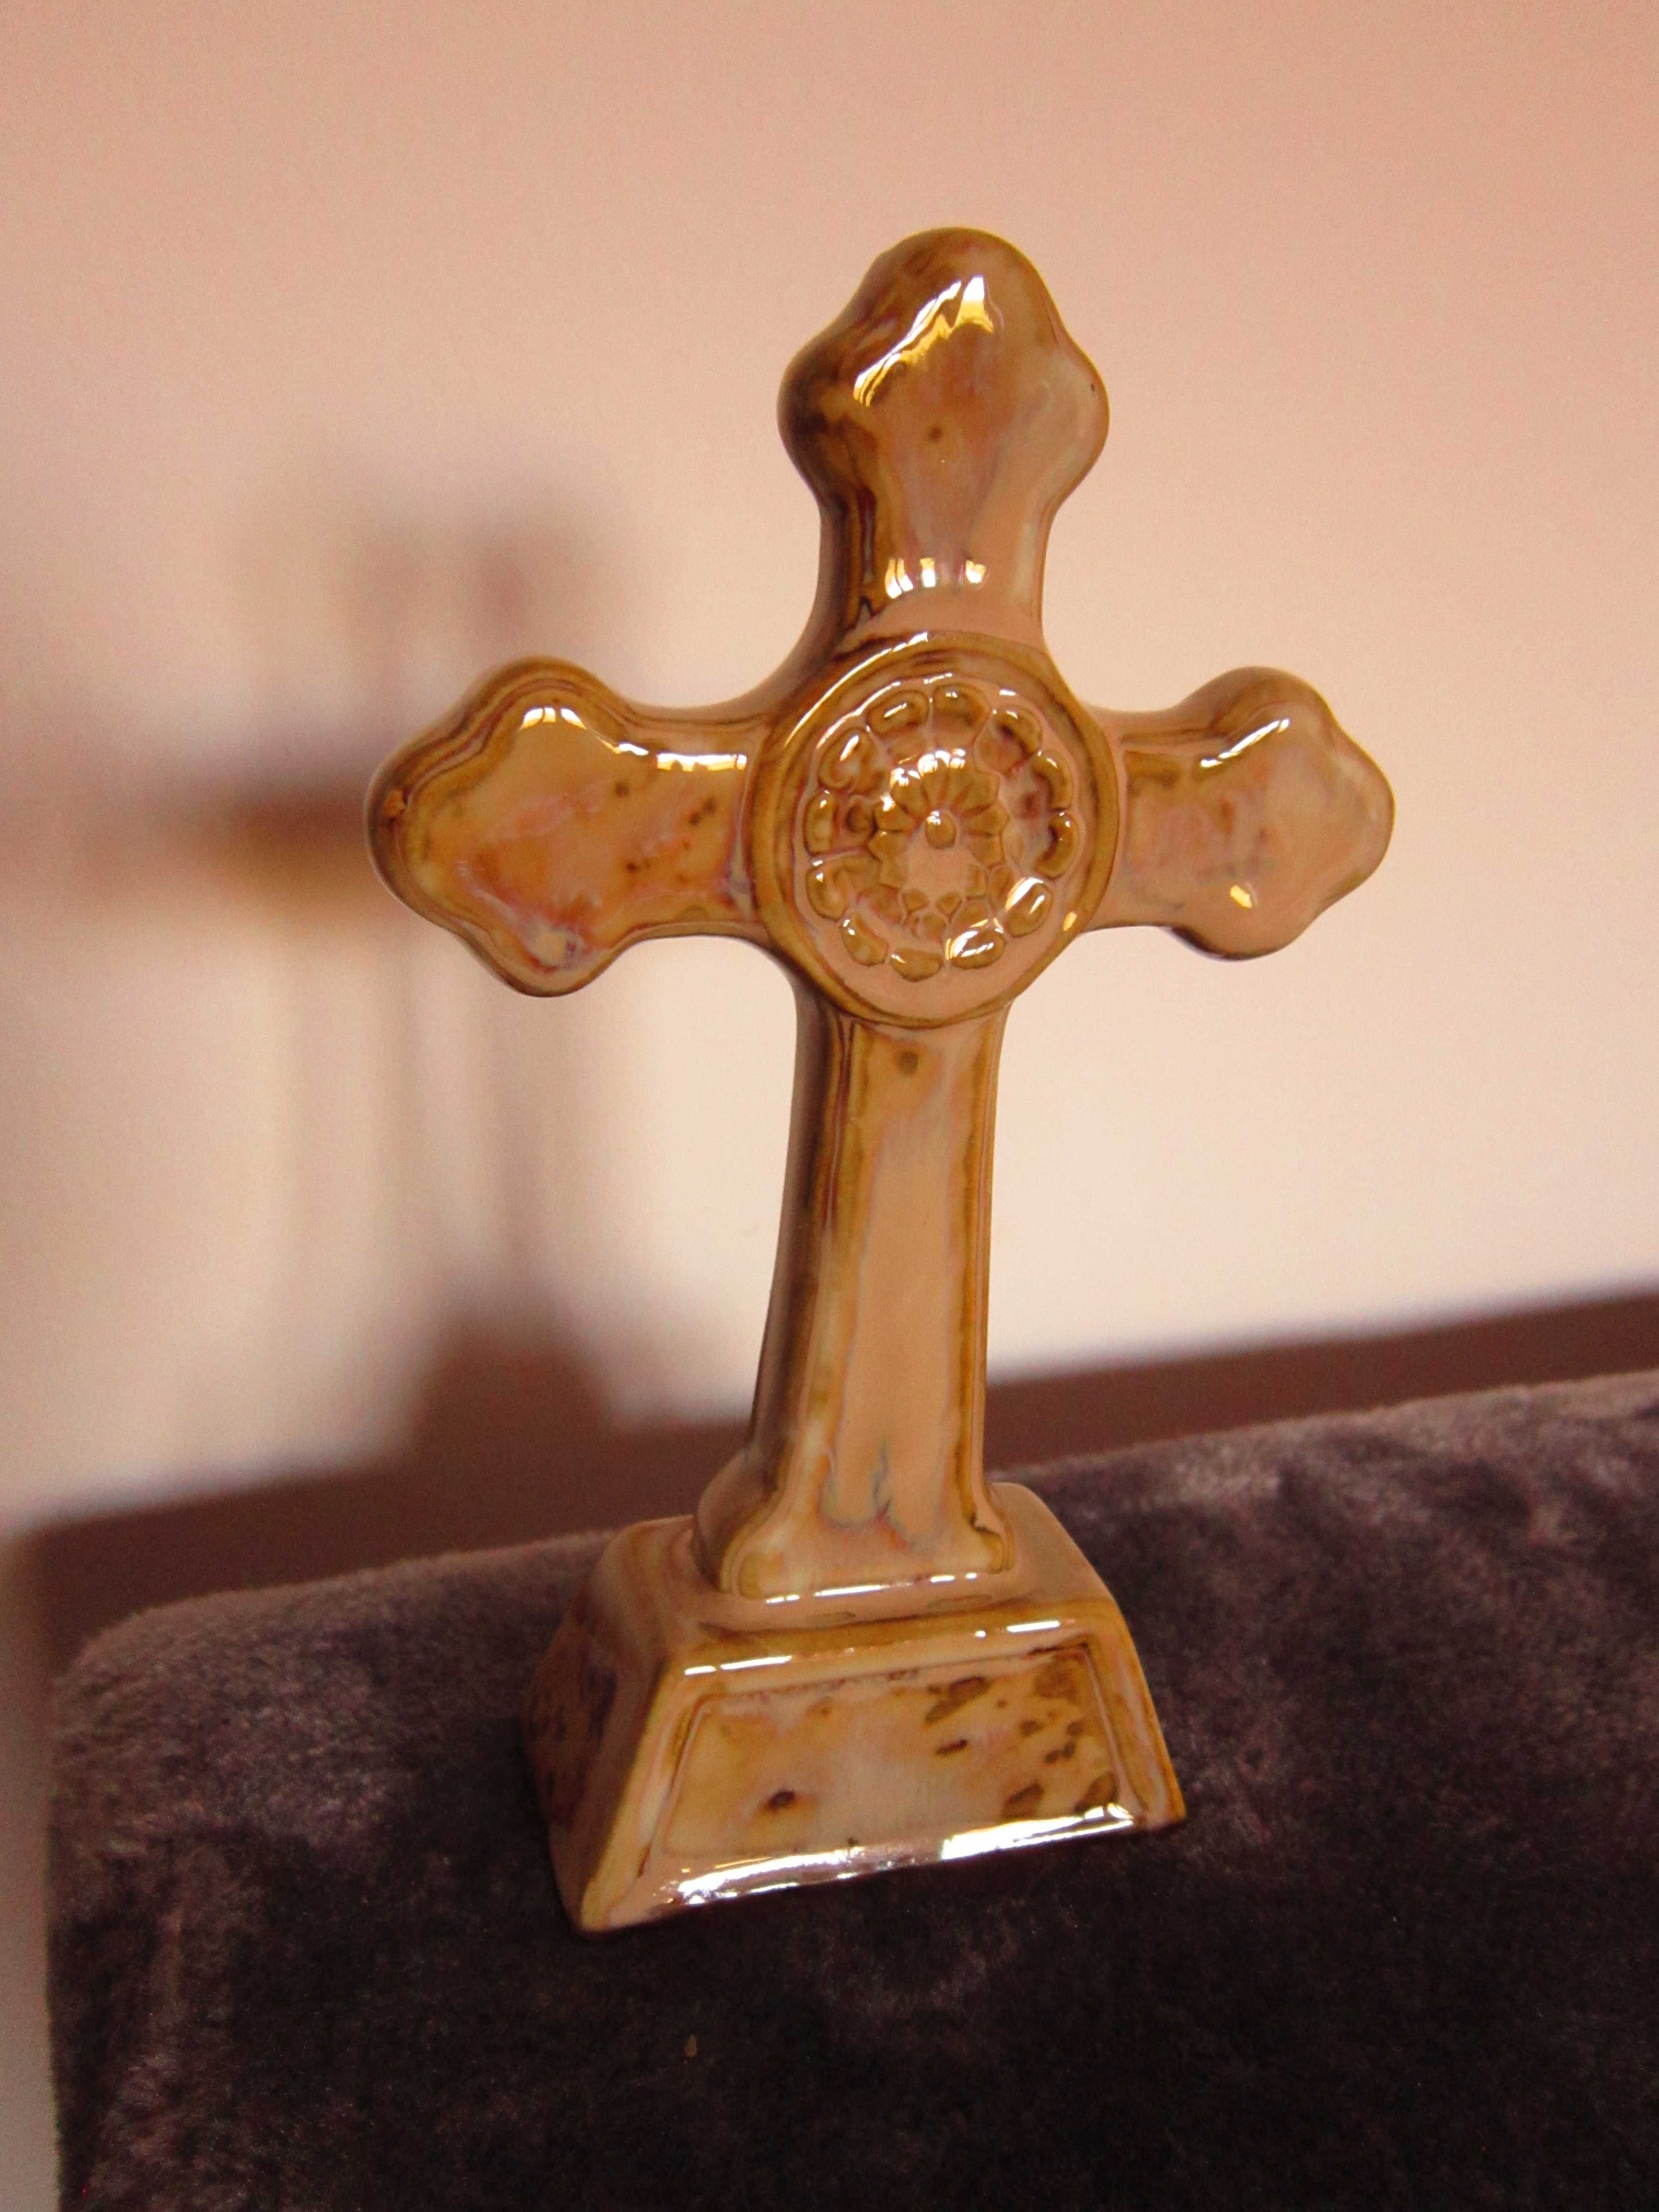 cadou rar Crucifix /Cruce vintage de colectie din portelan Franta'80